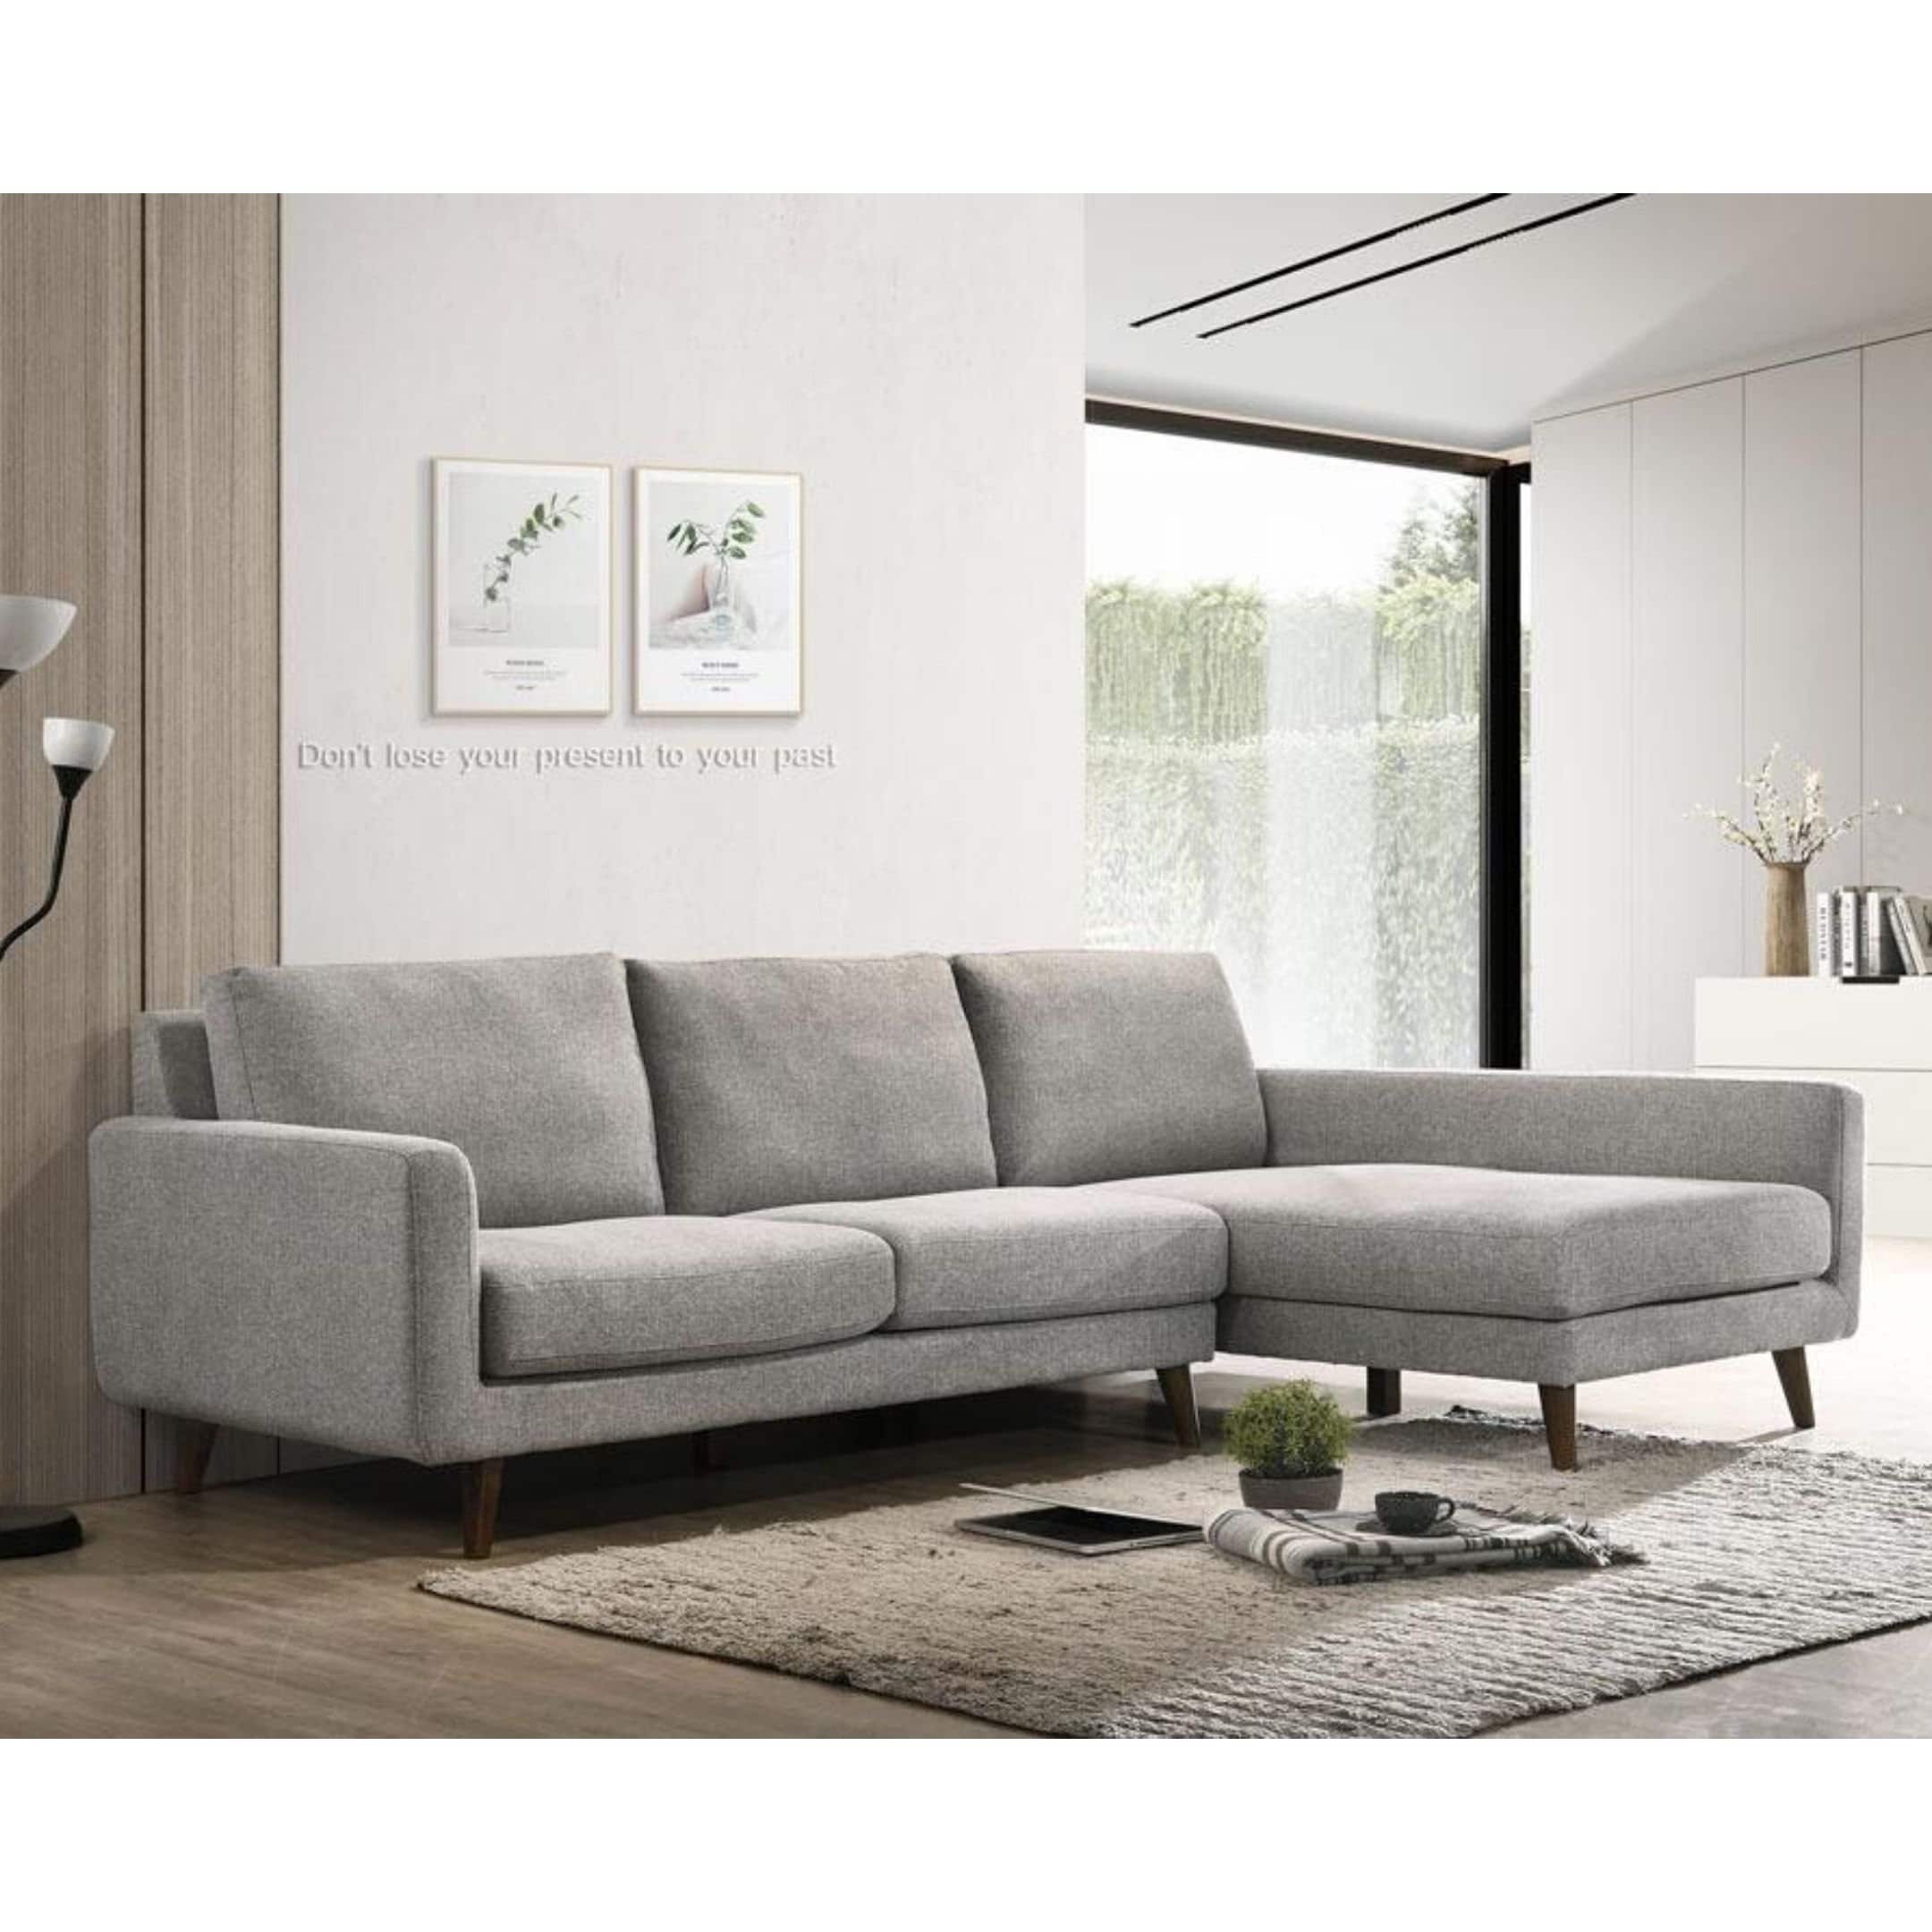 Ashcroft Mid Century Modern Brooklin Sectional Light Gray Sofa Right Facing - 33" x 97.5" x 85" - 33" x 97.5" x 85"